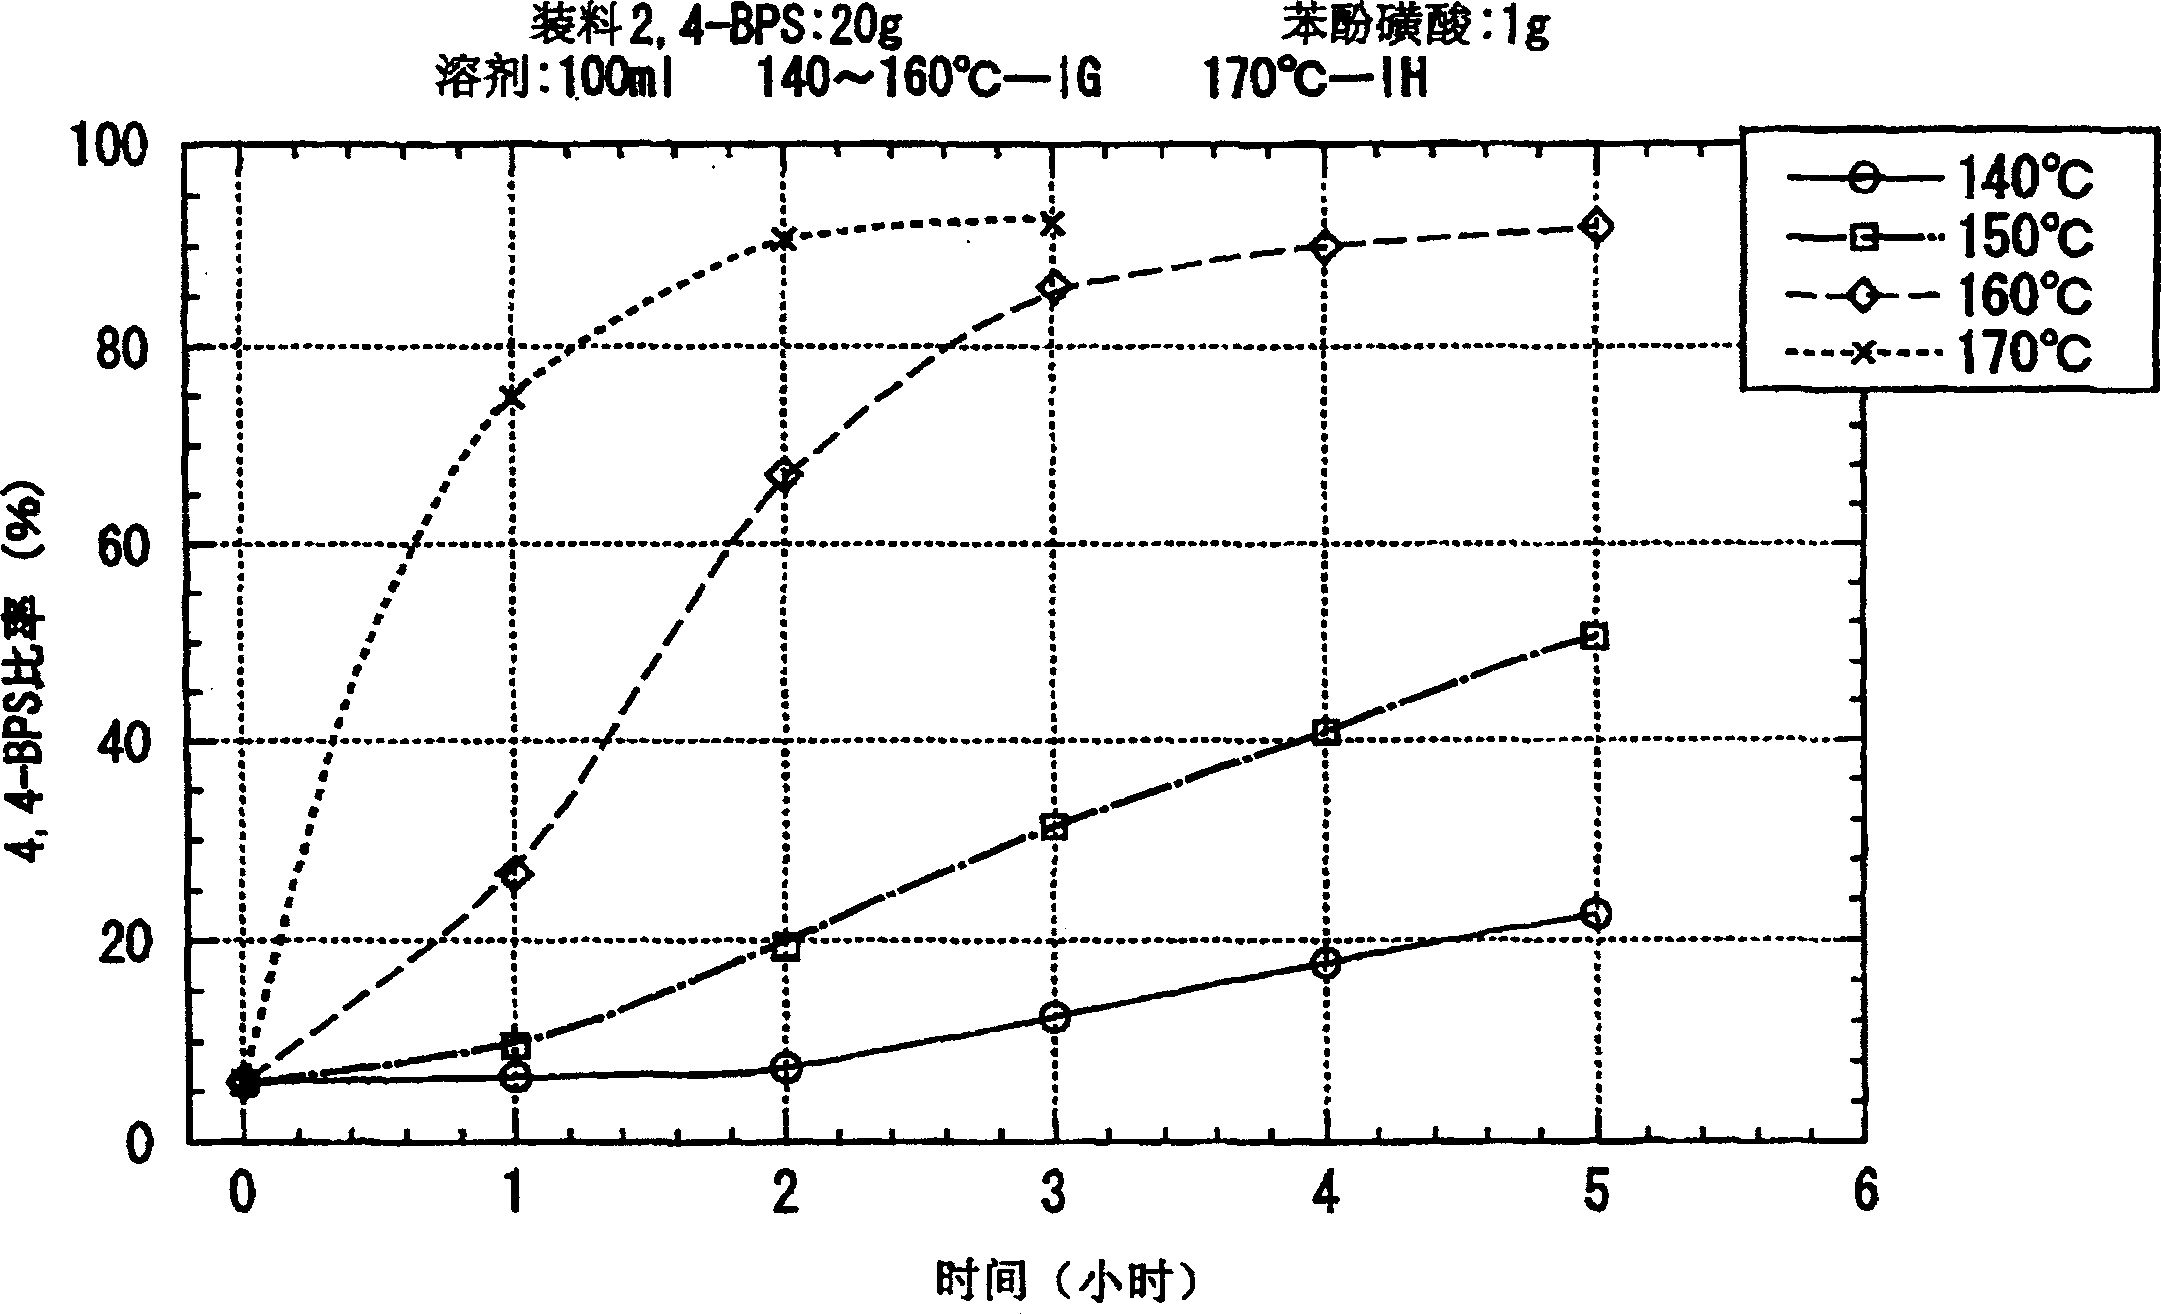 Process for producing 4,4'-bisphenol sulphone